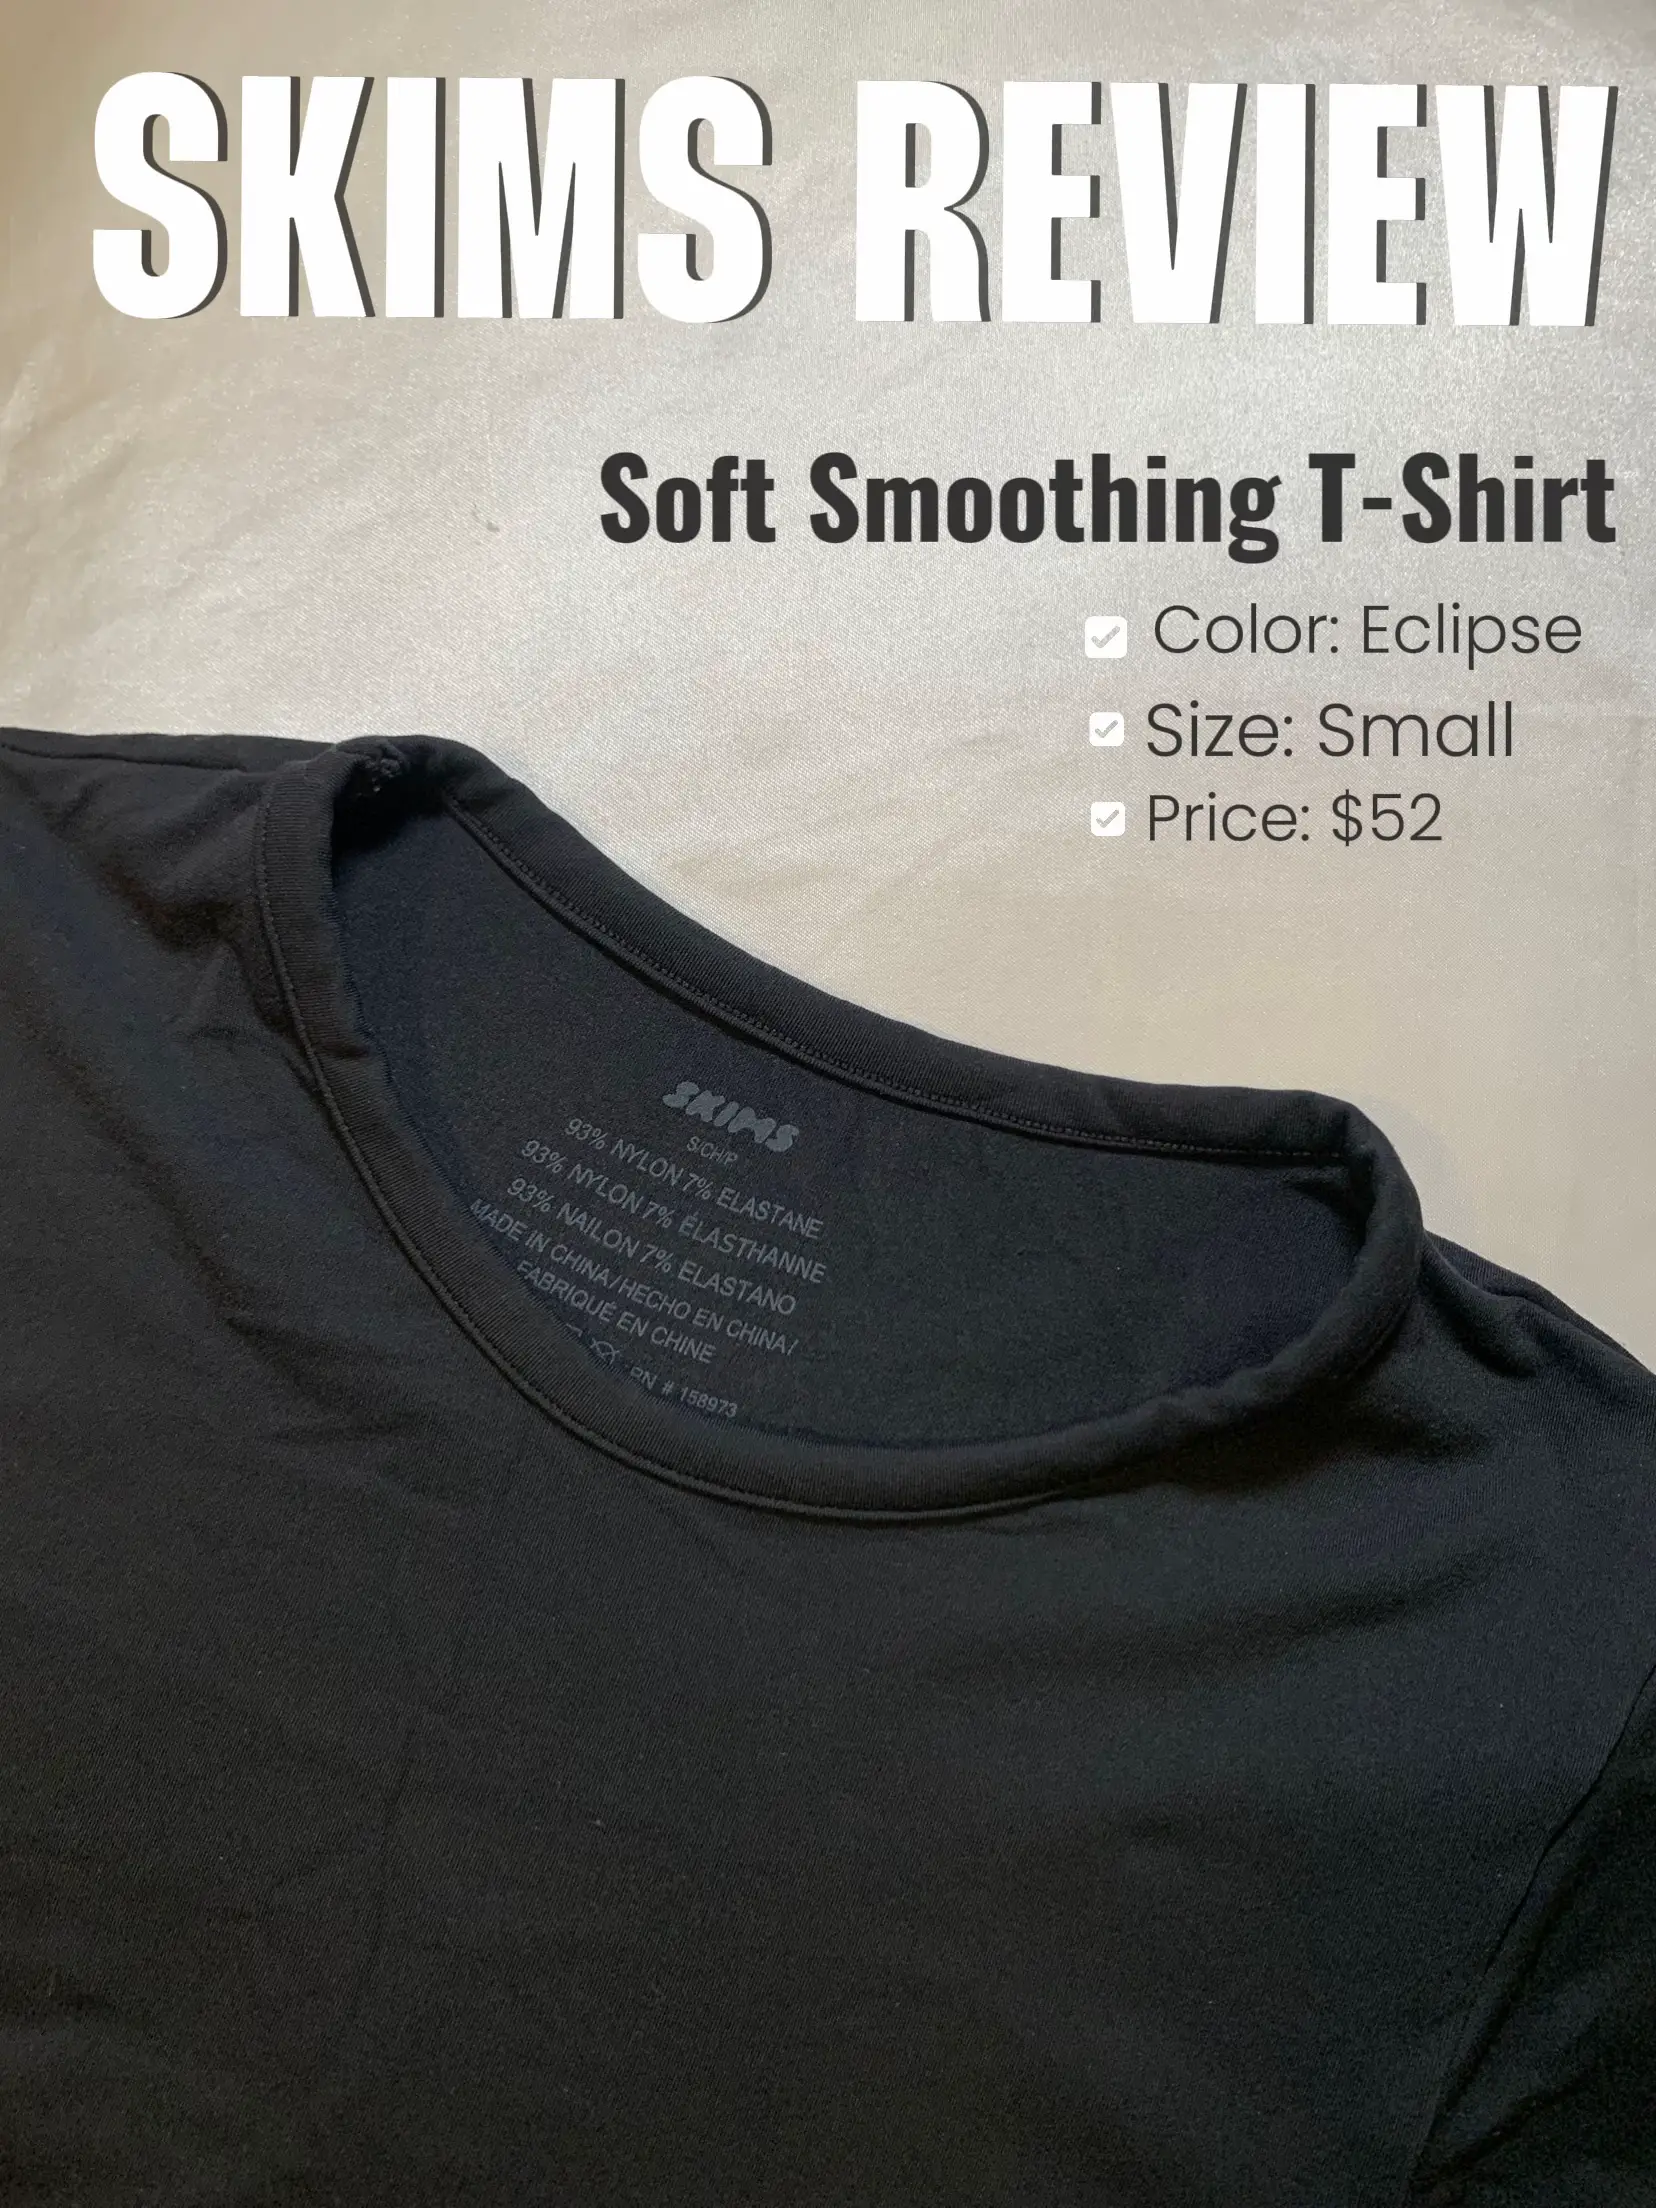 SKIMS - Fits Everybody T-Shirt Bra, Video published by exactlydani